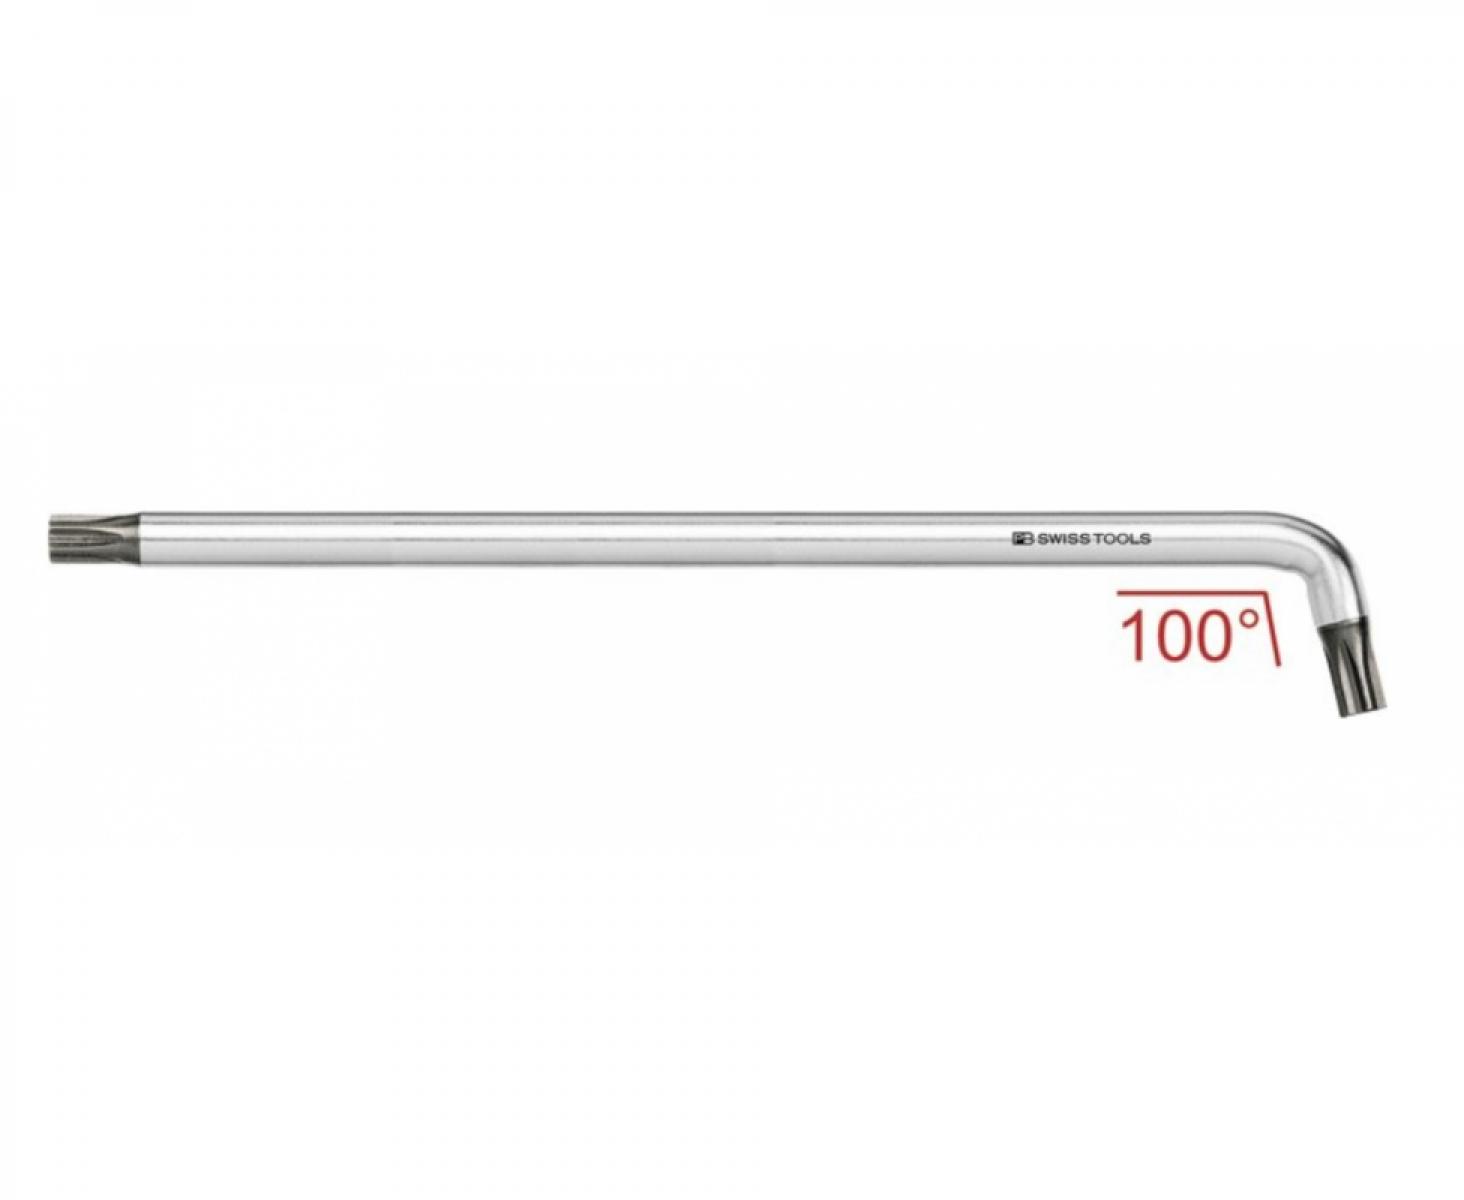 Ключ штифтовый TORX длинный PB Swiss Tools PB 2411.25 изогнутый на 100º T25